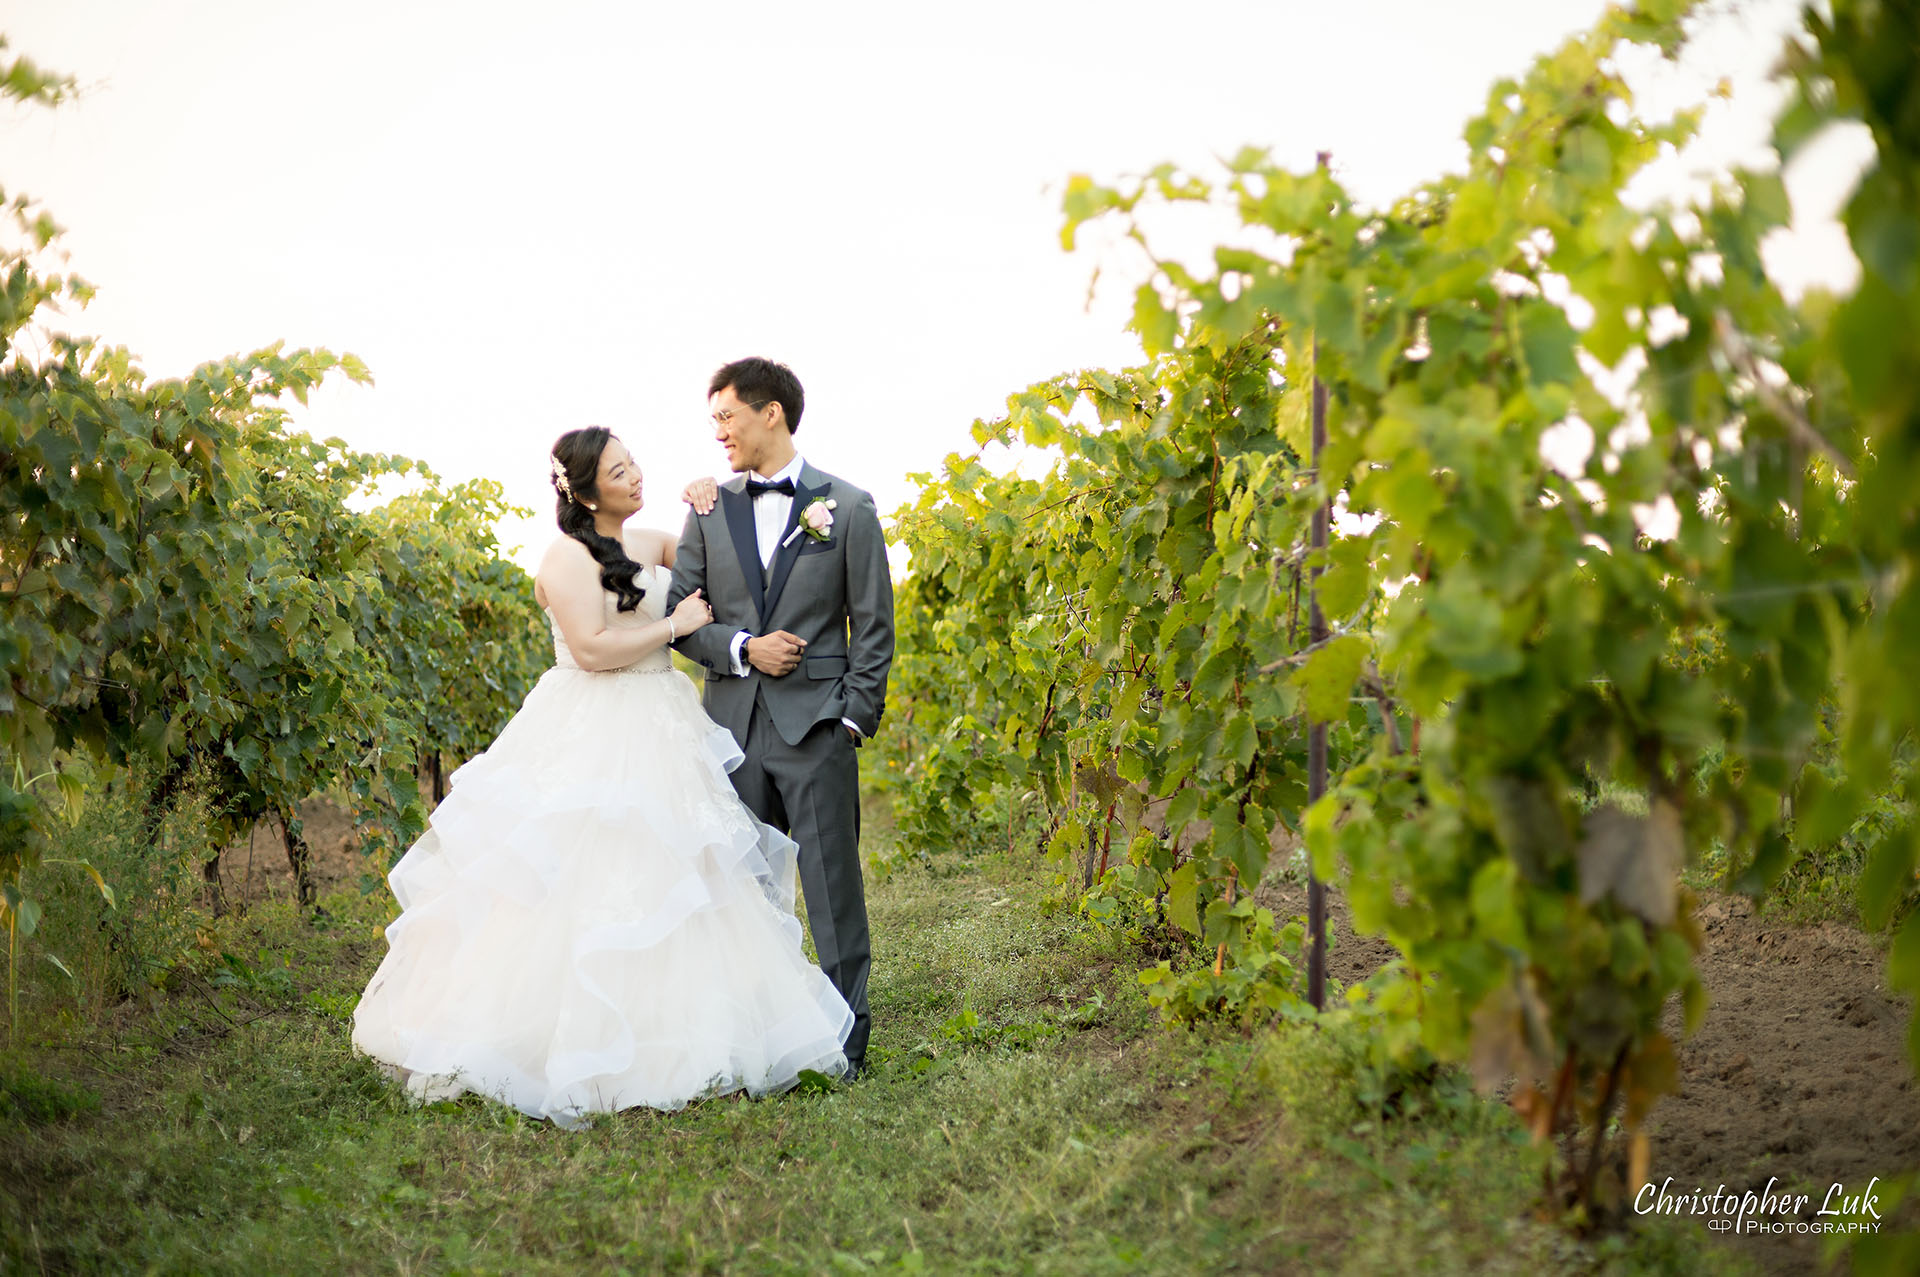 Willow Springs Winery Bride Groom Portrait Candid Natural Photojournalistic Vineyard Rows of Grape Vines Hug